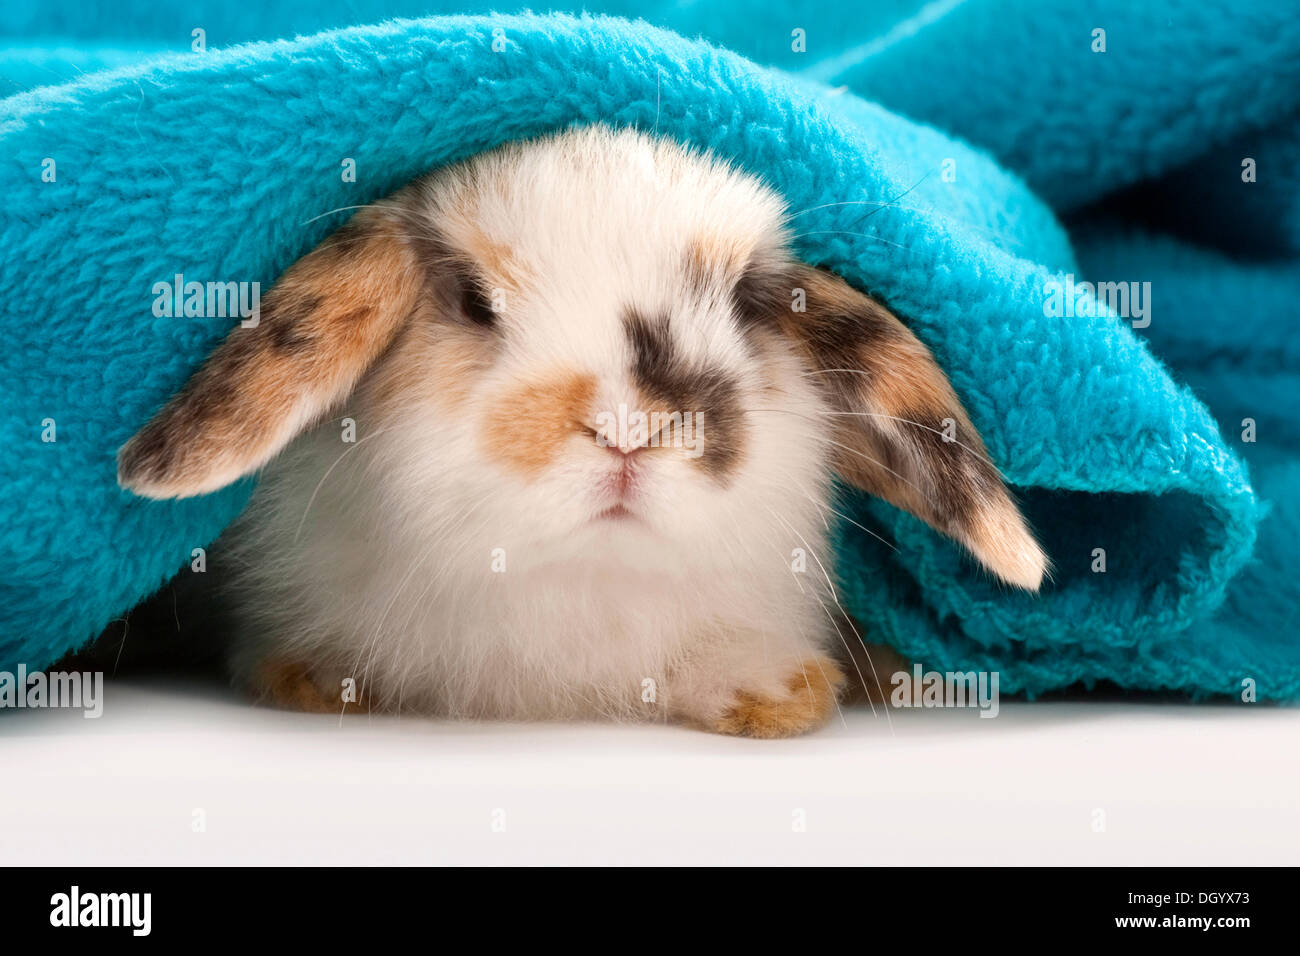 Young dwarf rabbit, dwarf ram, lying under blanket Stock Photo